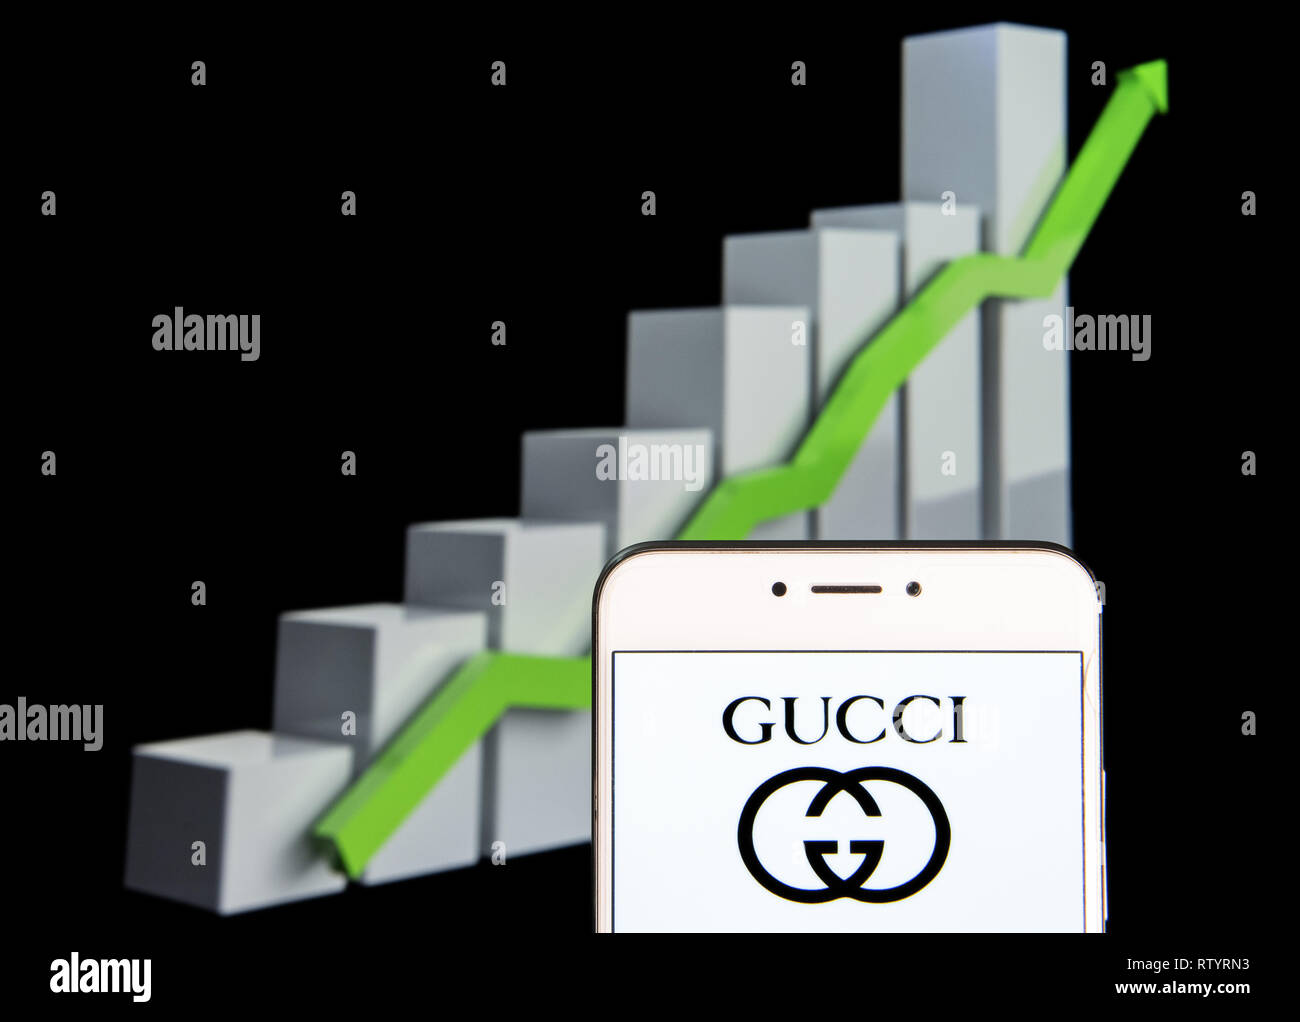 Gucci Group Stock Chart